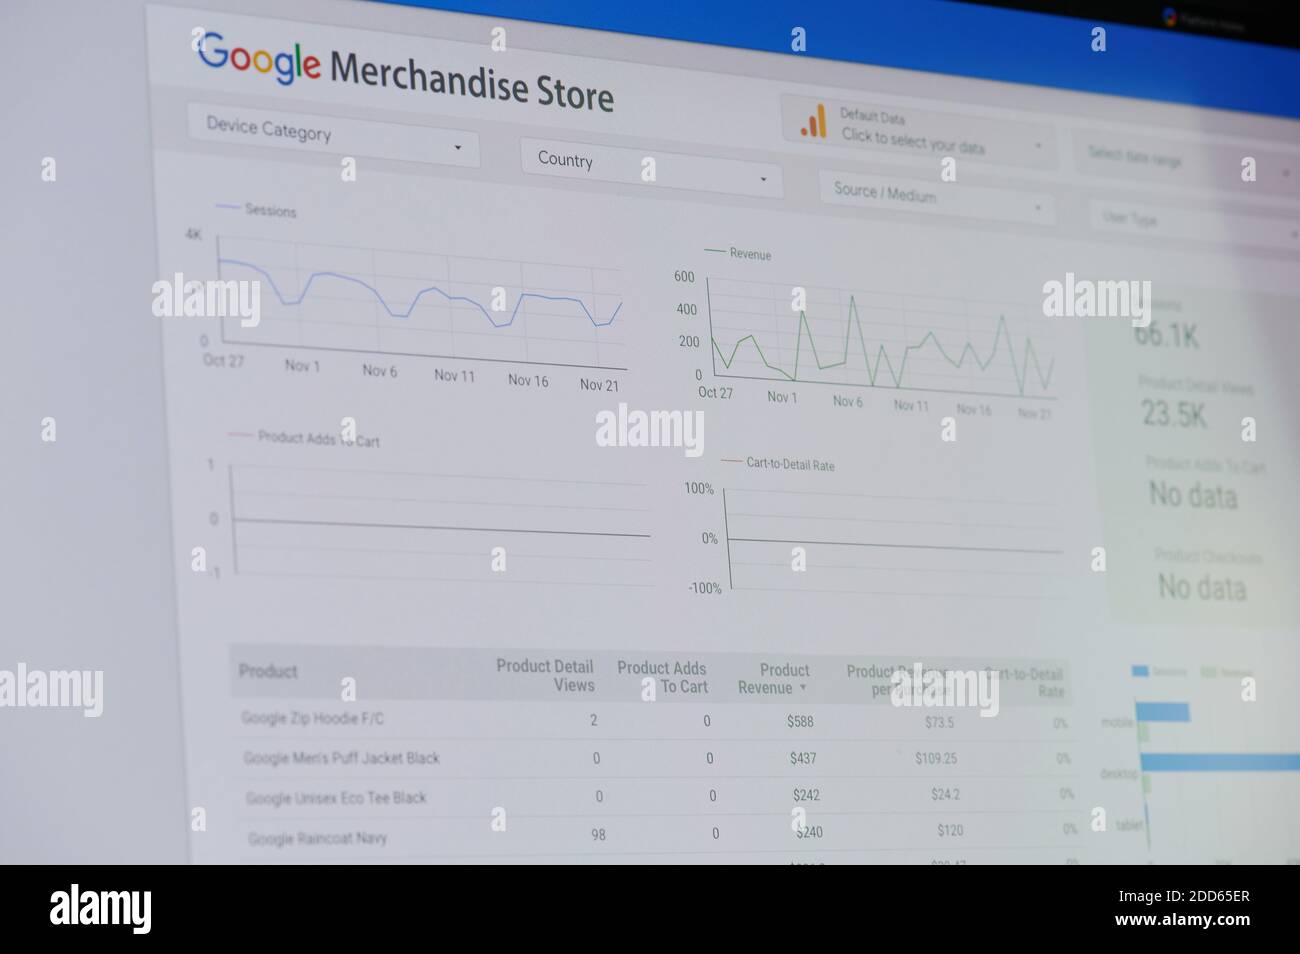 New york, USA - 24. November 2020: Google Merchandise Store Dashboard auf Laptop-Bildschirm Stockfoto